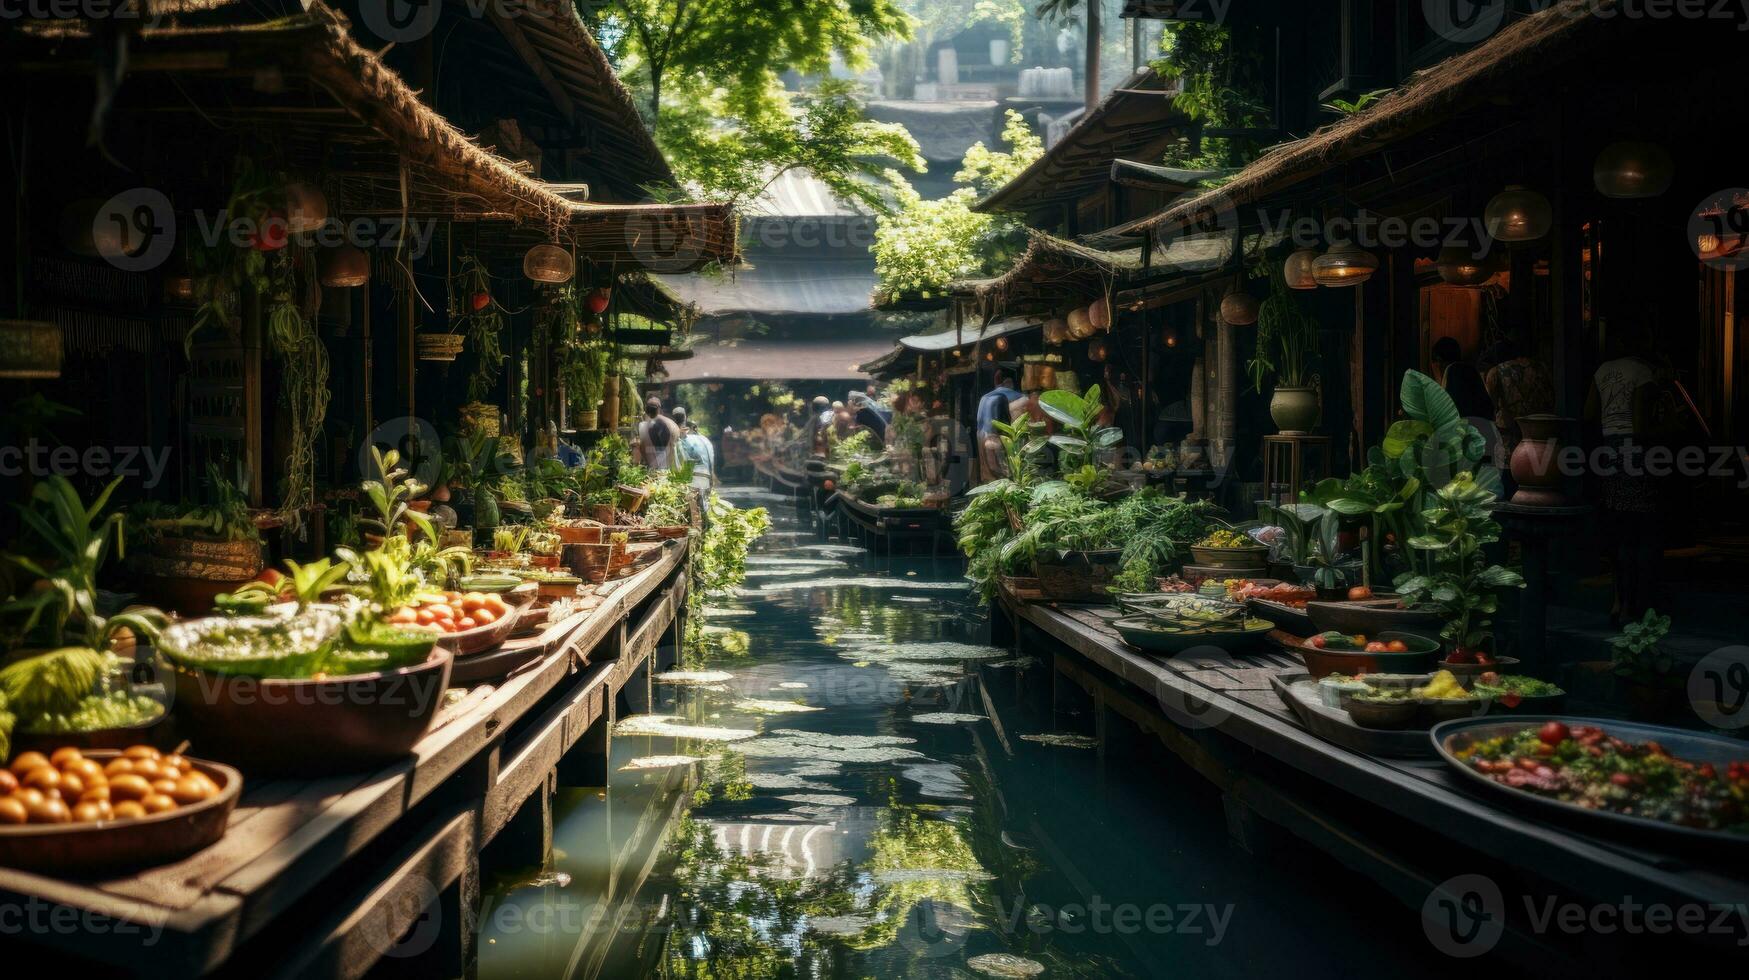 bukit bintang Wasser Markt, Bali, Indonesien foto